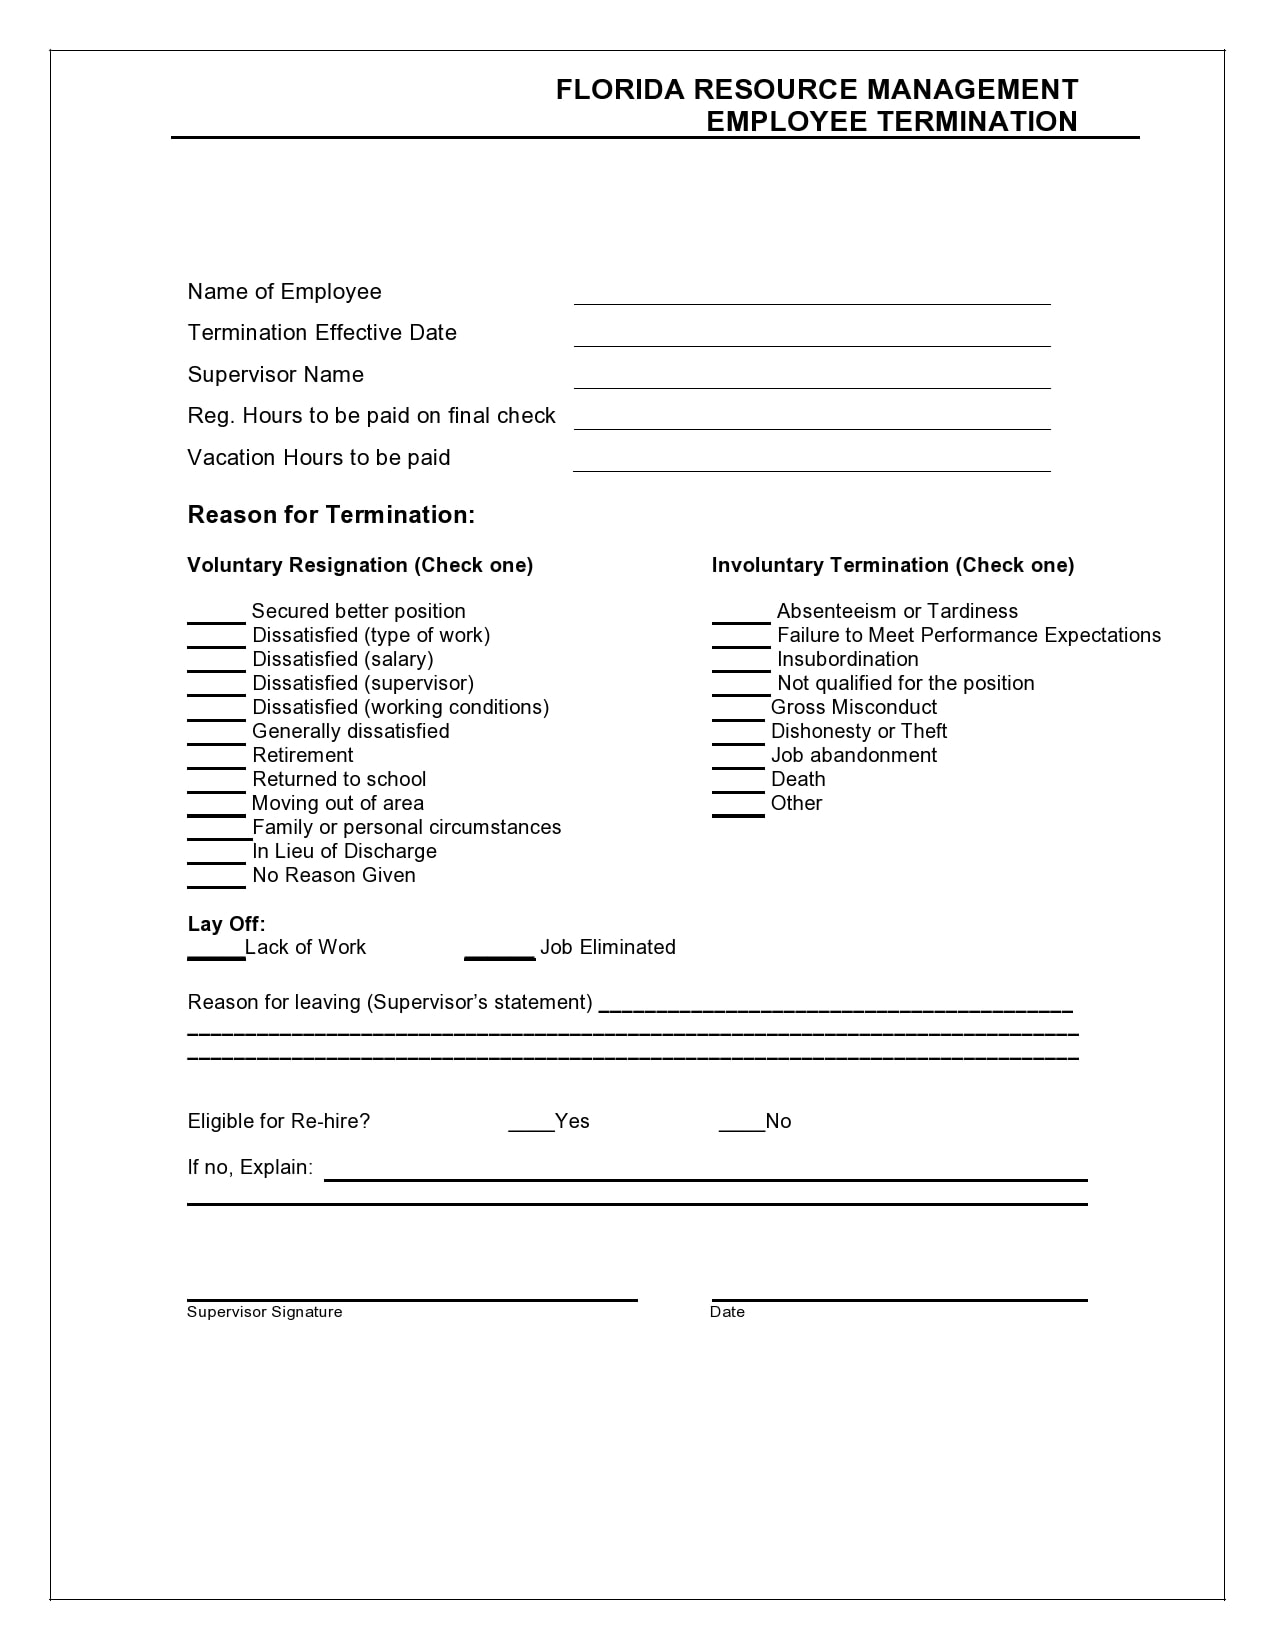 free employee termination form